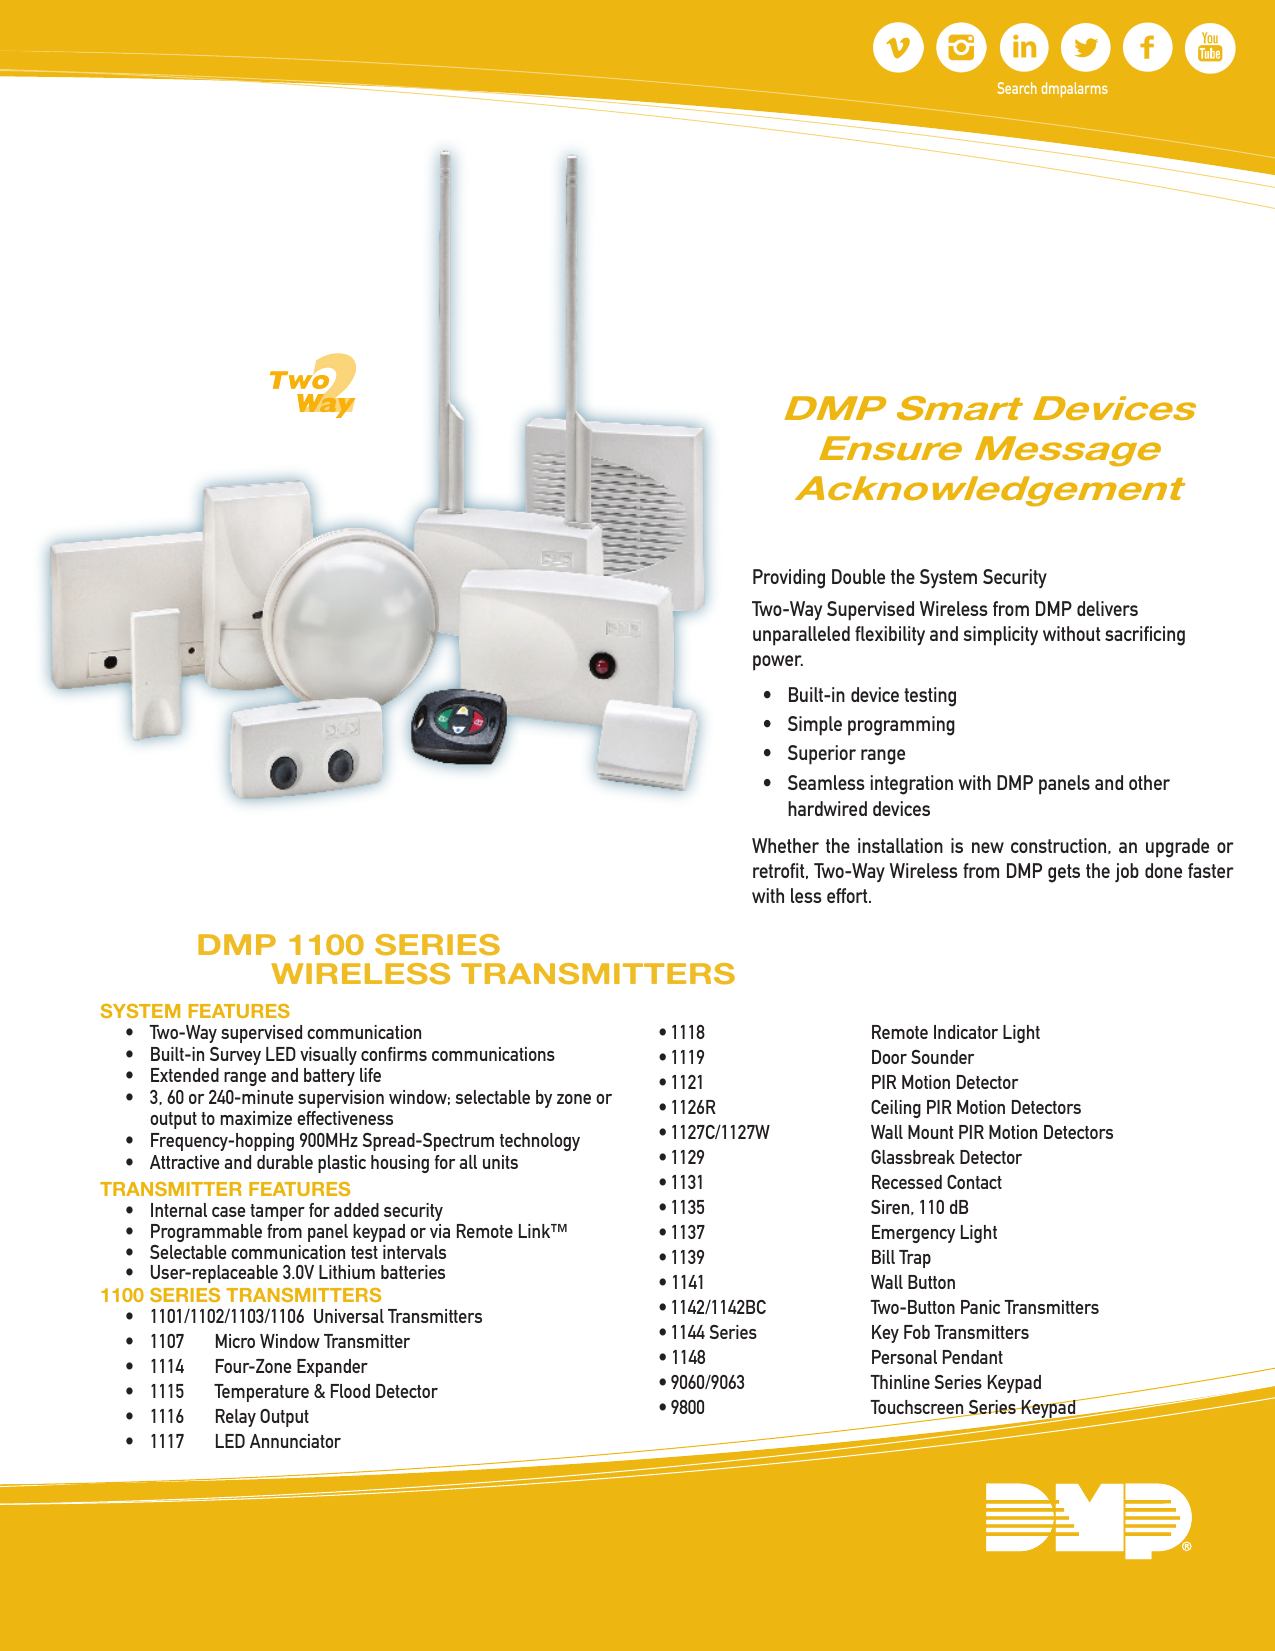 NEW SEALED DMP 1139 Digital Monitoring Wireless Bill Trap Transmitter Black 